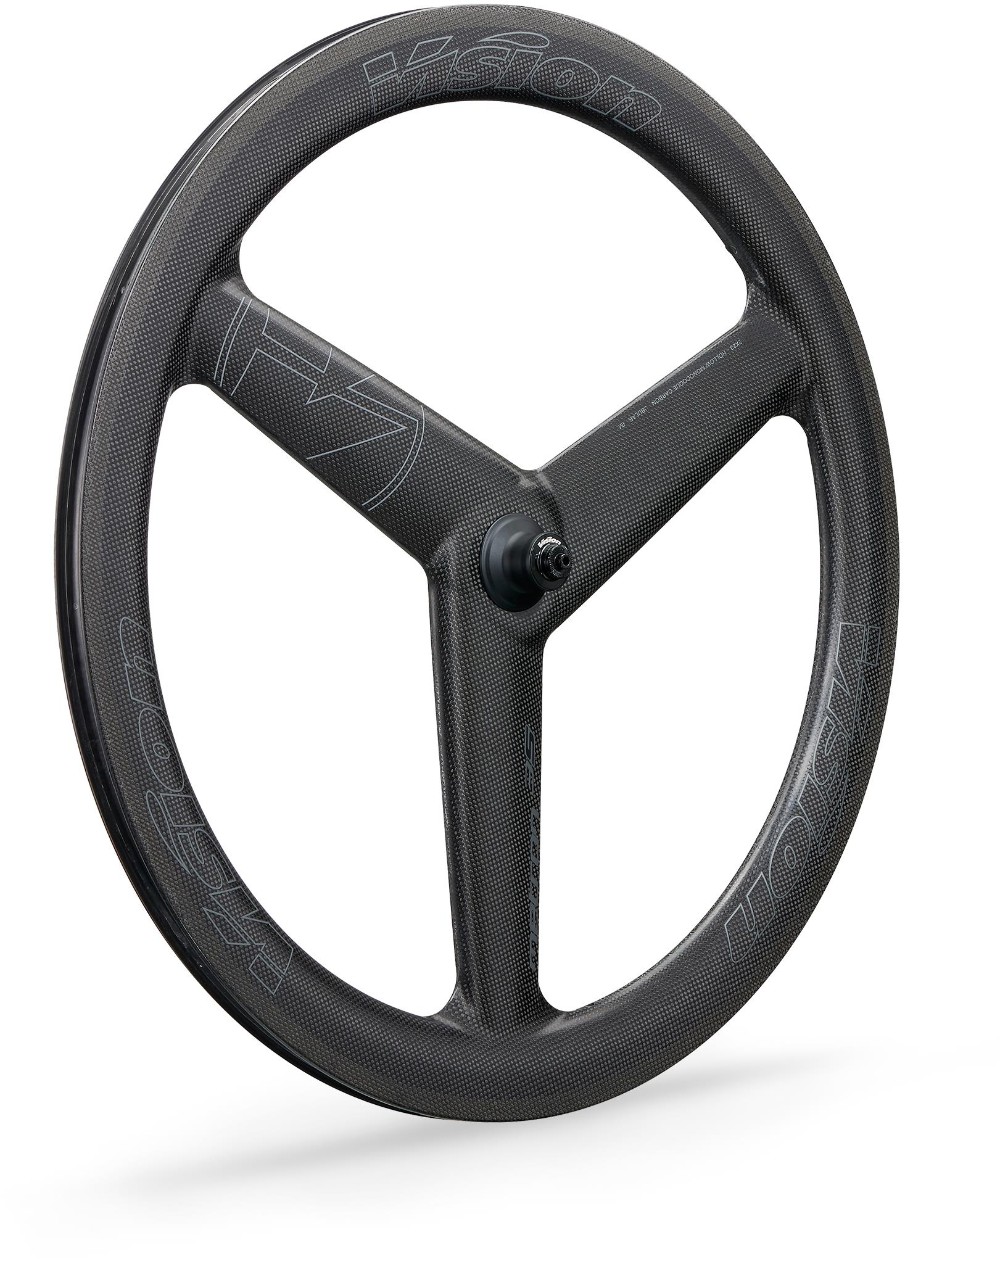 Metron 3-Spoke Disc Carbon Clincher Road Front Wheel image 0